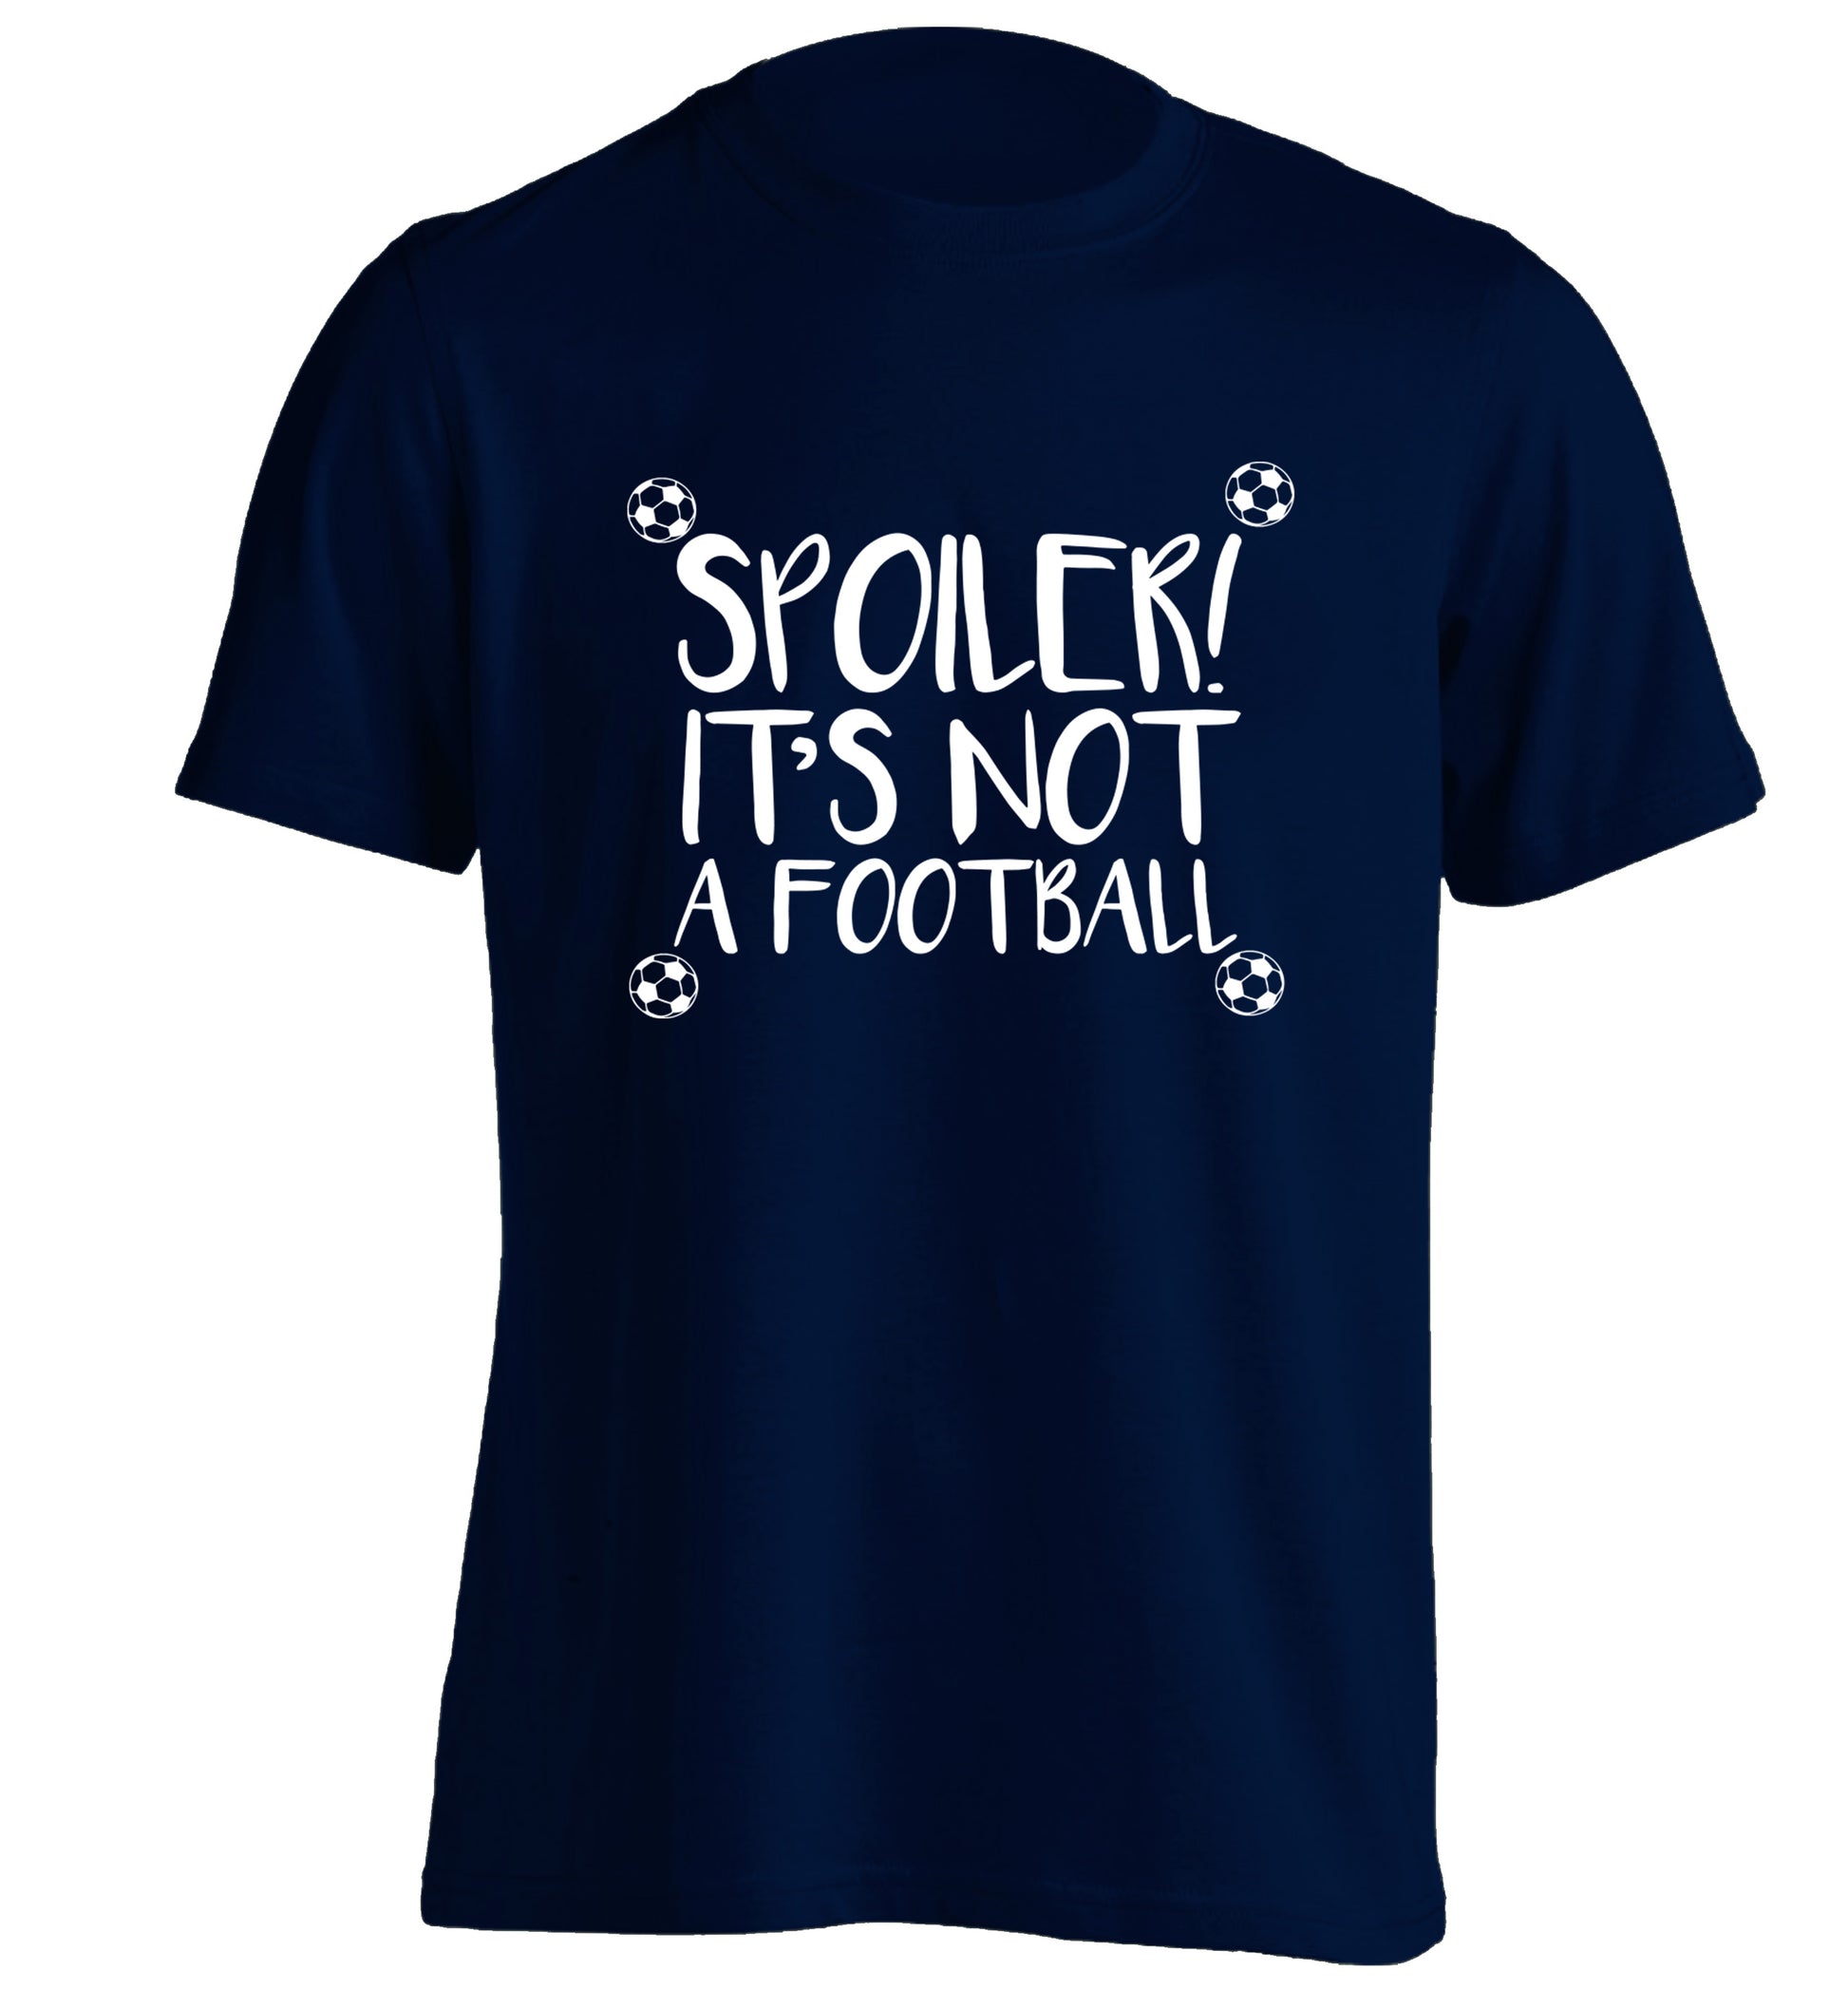 Spoiler it's not a football adults unisex navy Tshirt 2XL